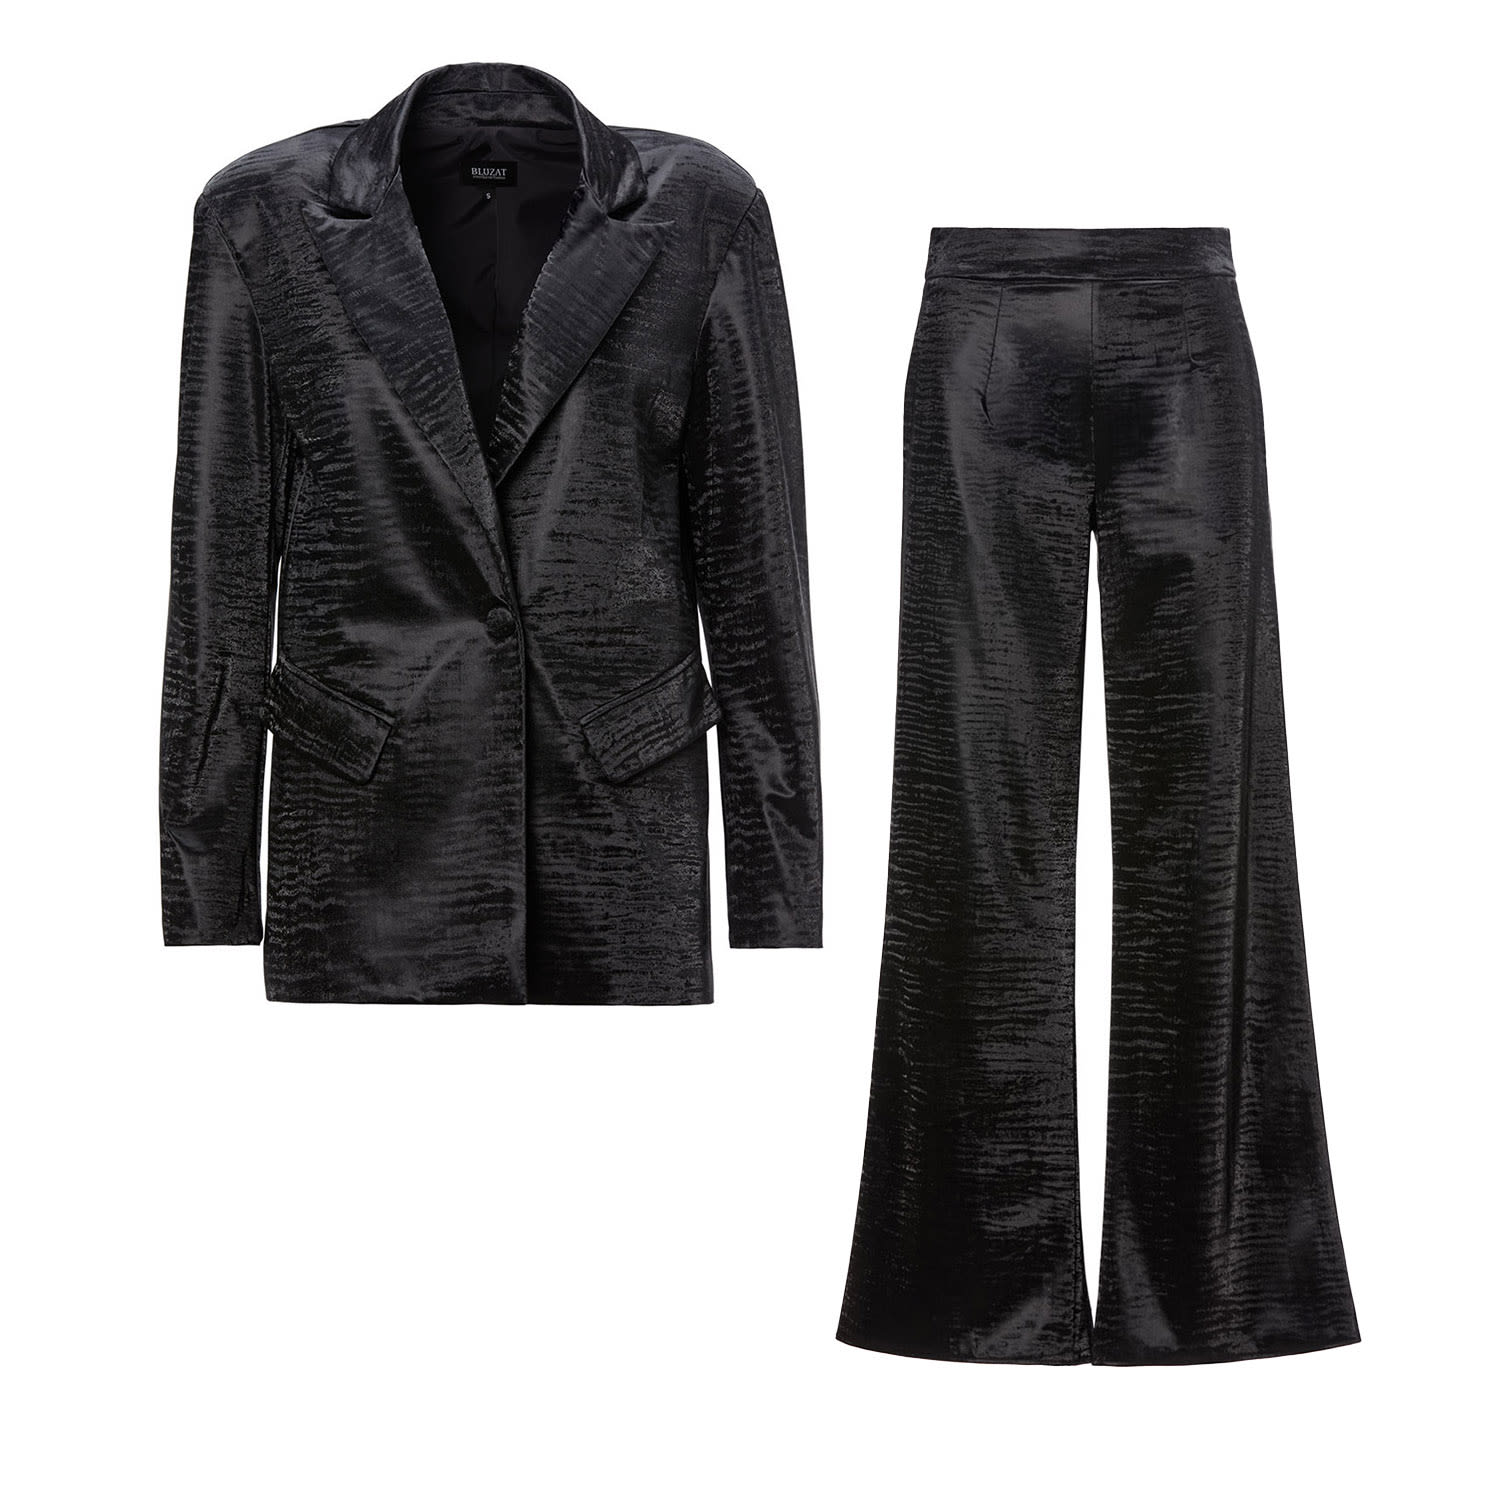 Print Black Leather Suit With Regular Blazer And Straight-Cut Trousers Medium Bluzat